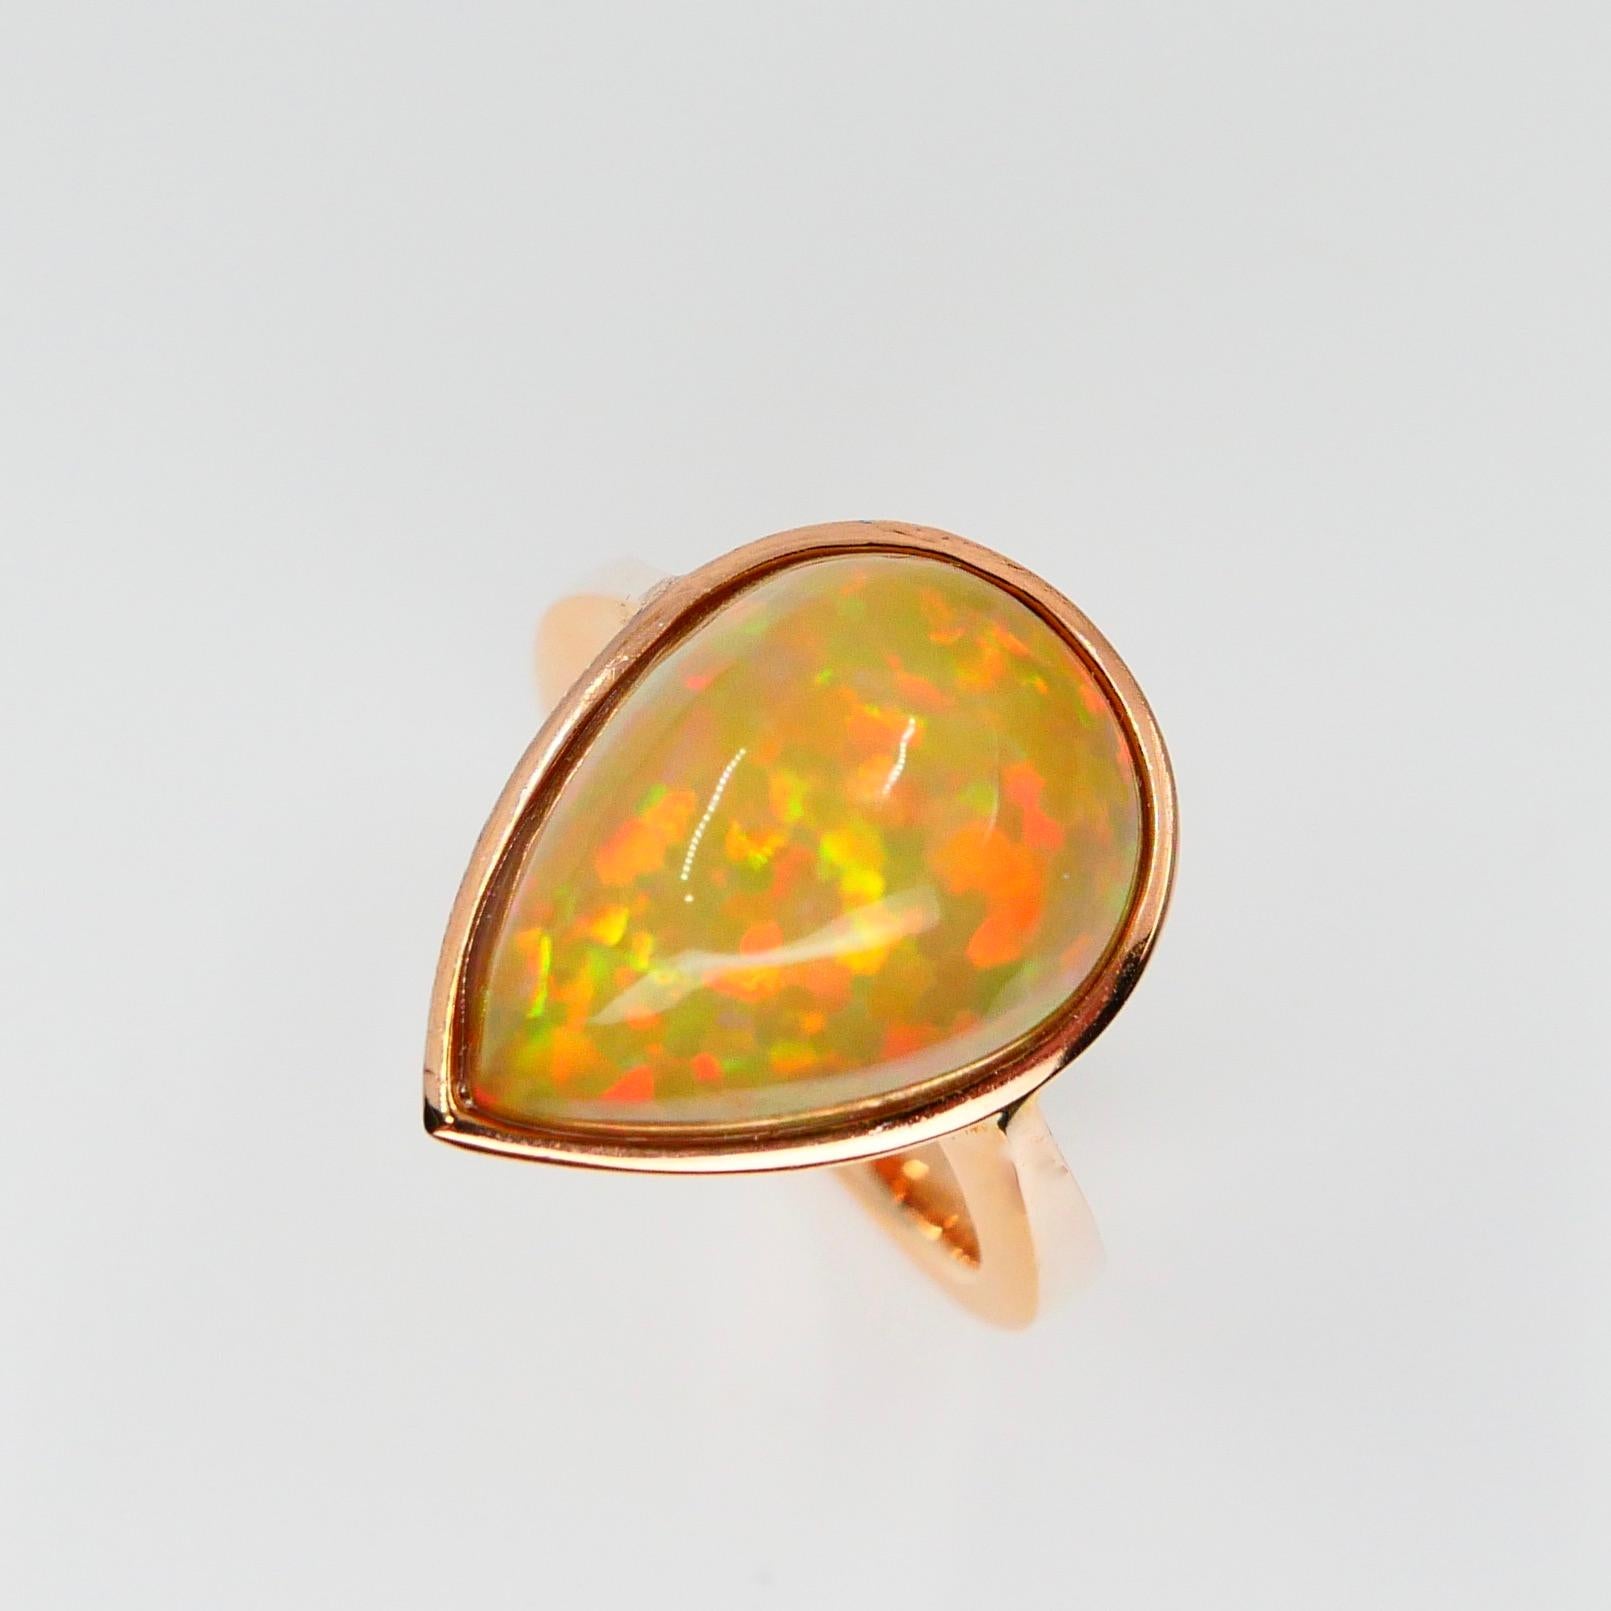 5.85 Carat Opal Ring Set in 18 Karat Gold Colorful Red, Green, Orange and Yellow 6